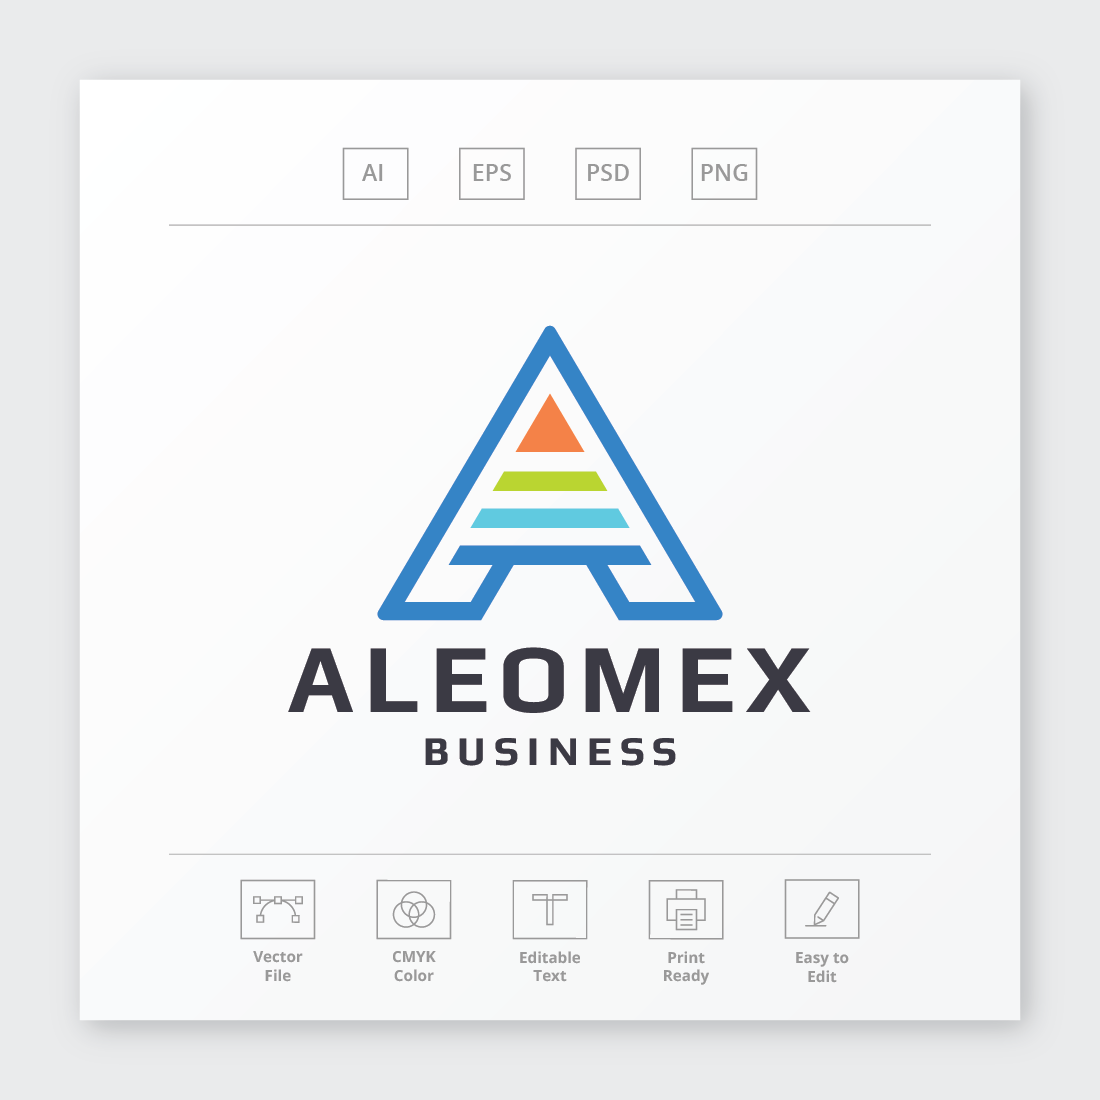 Aleomex Letter A Logo preview image.